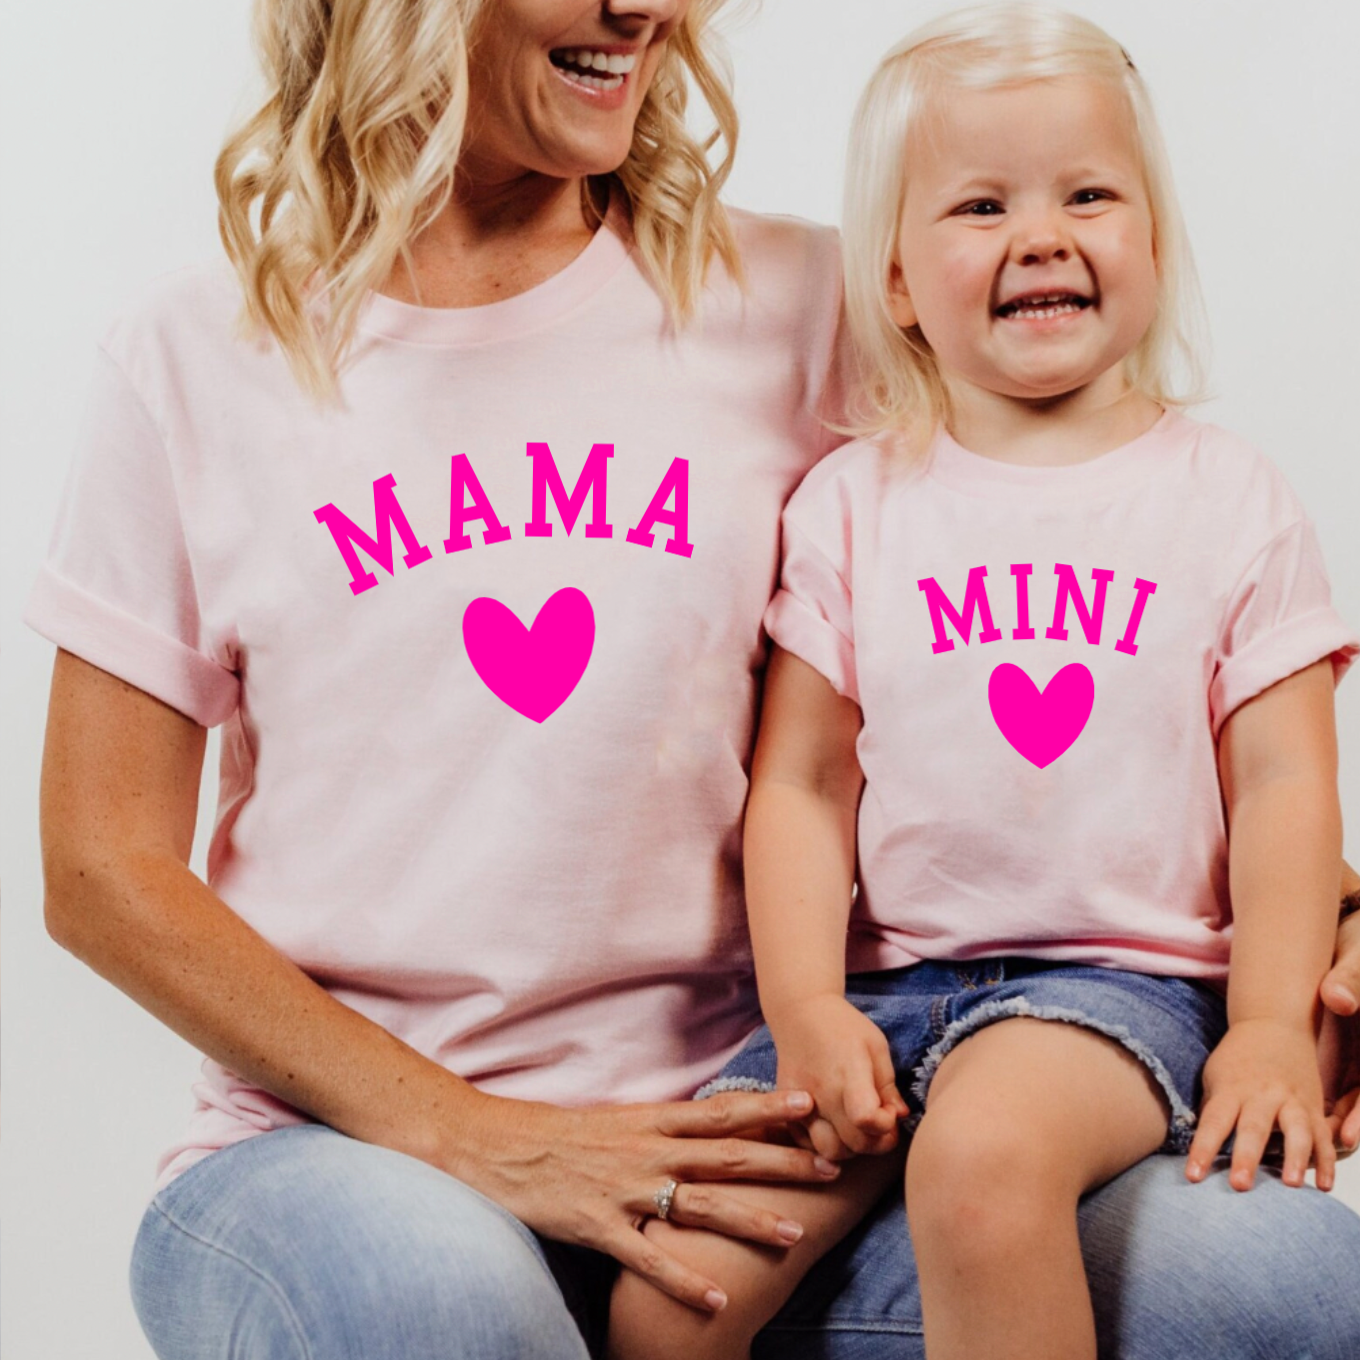 Mama and Mini Matching Light Pink and Hot Pink Tees